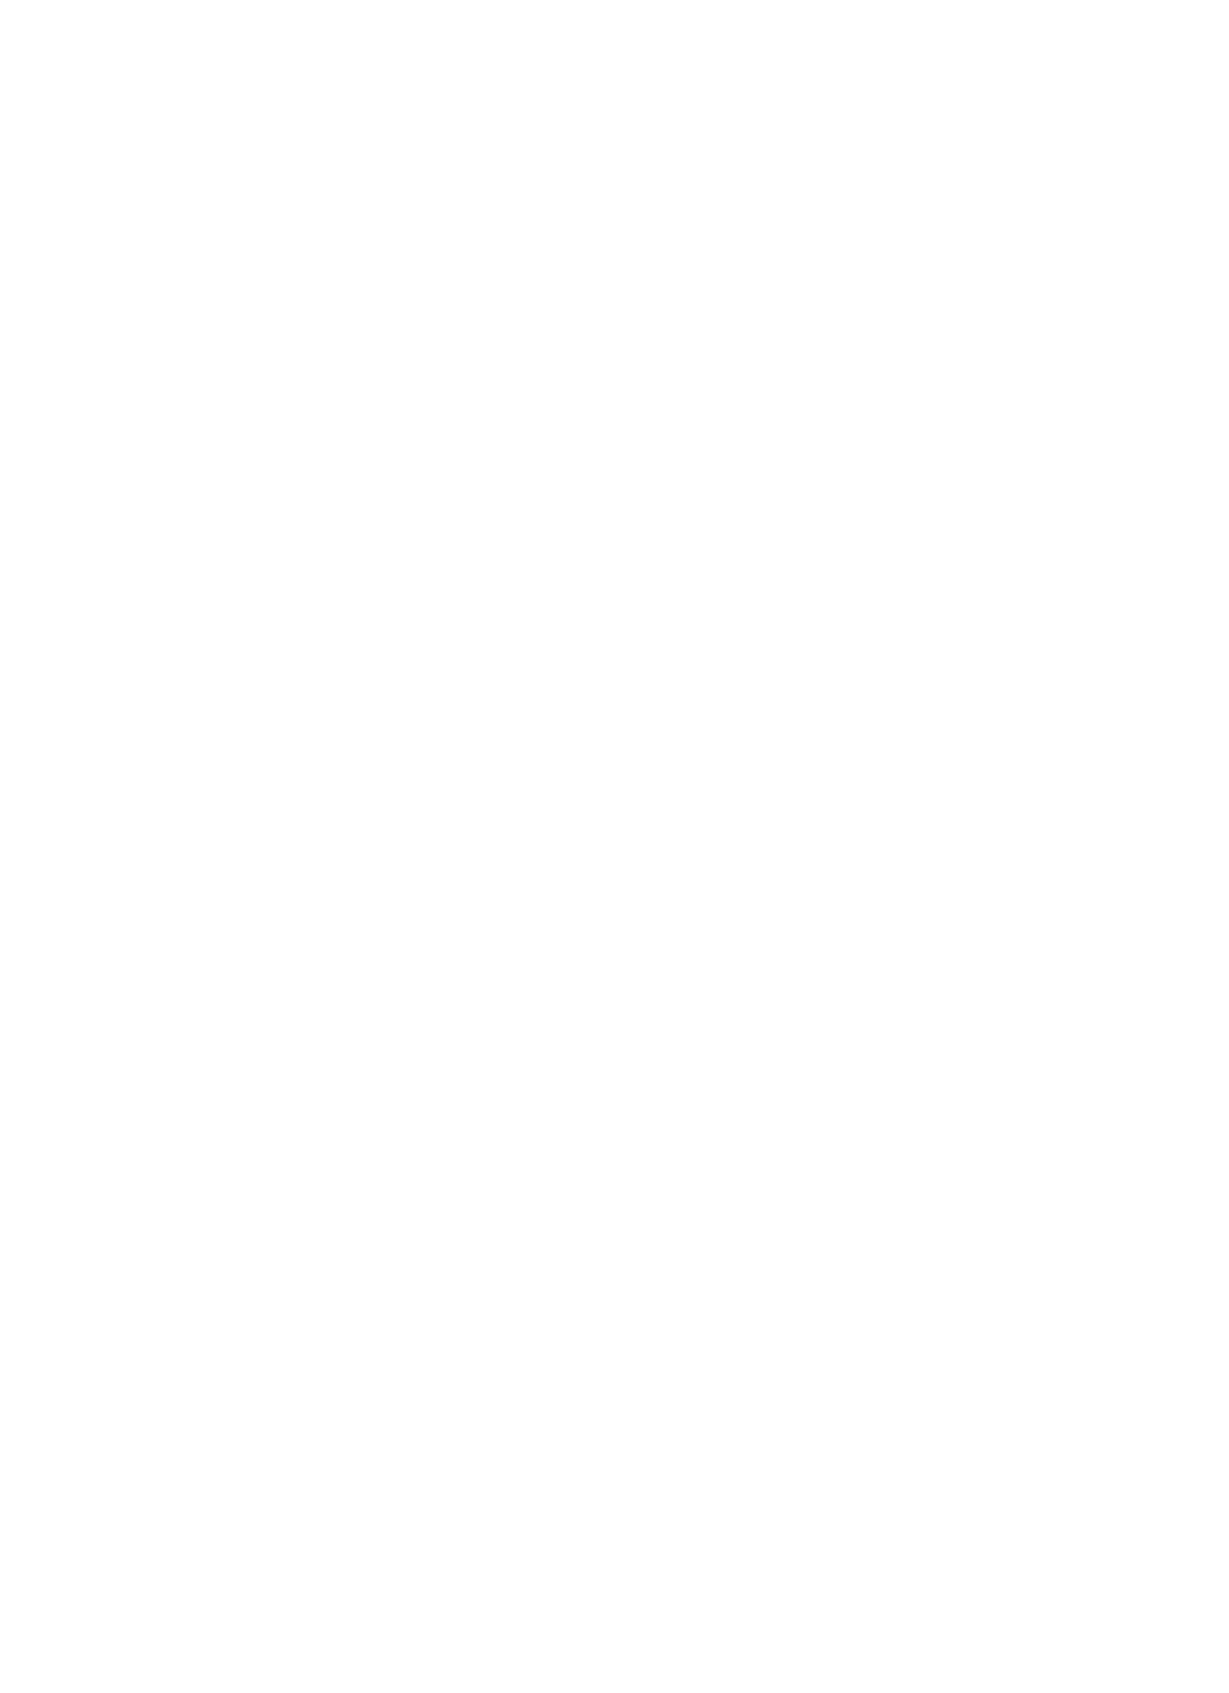 Rent the Runway logo pour fonds sombres (PNG transparent)